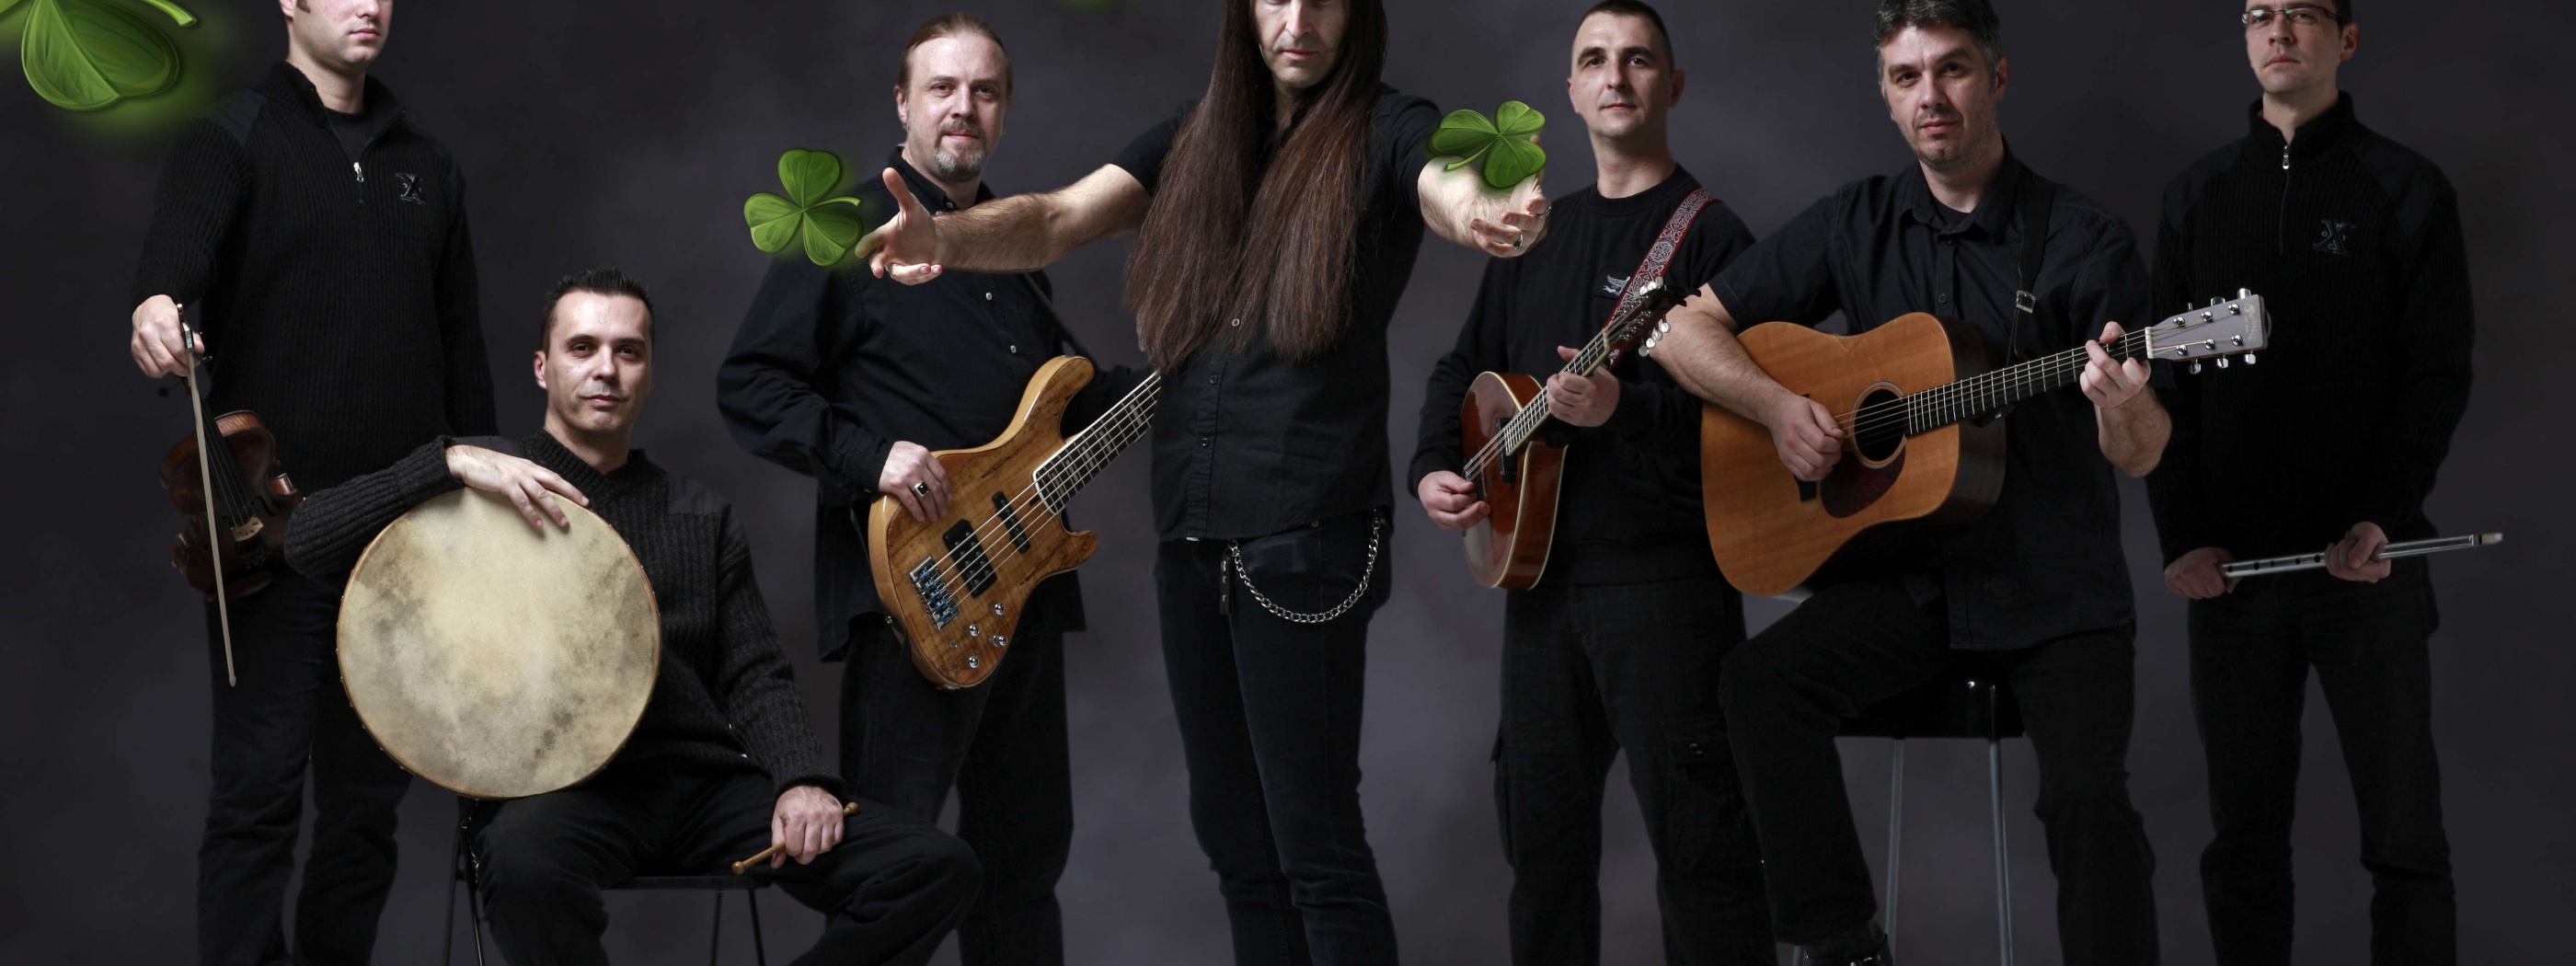 Orthodox Celts Serbian Music Band